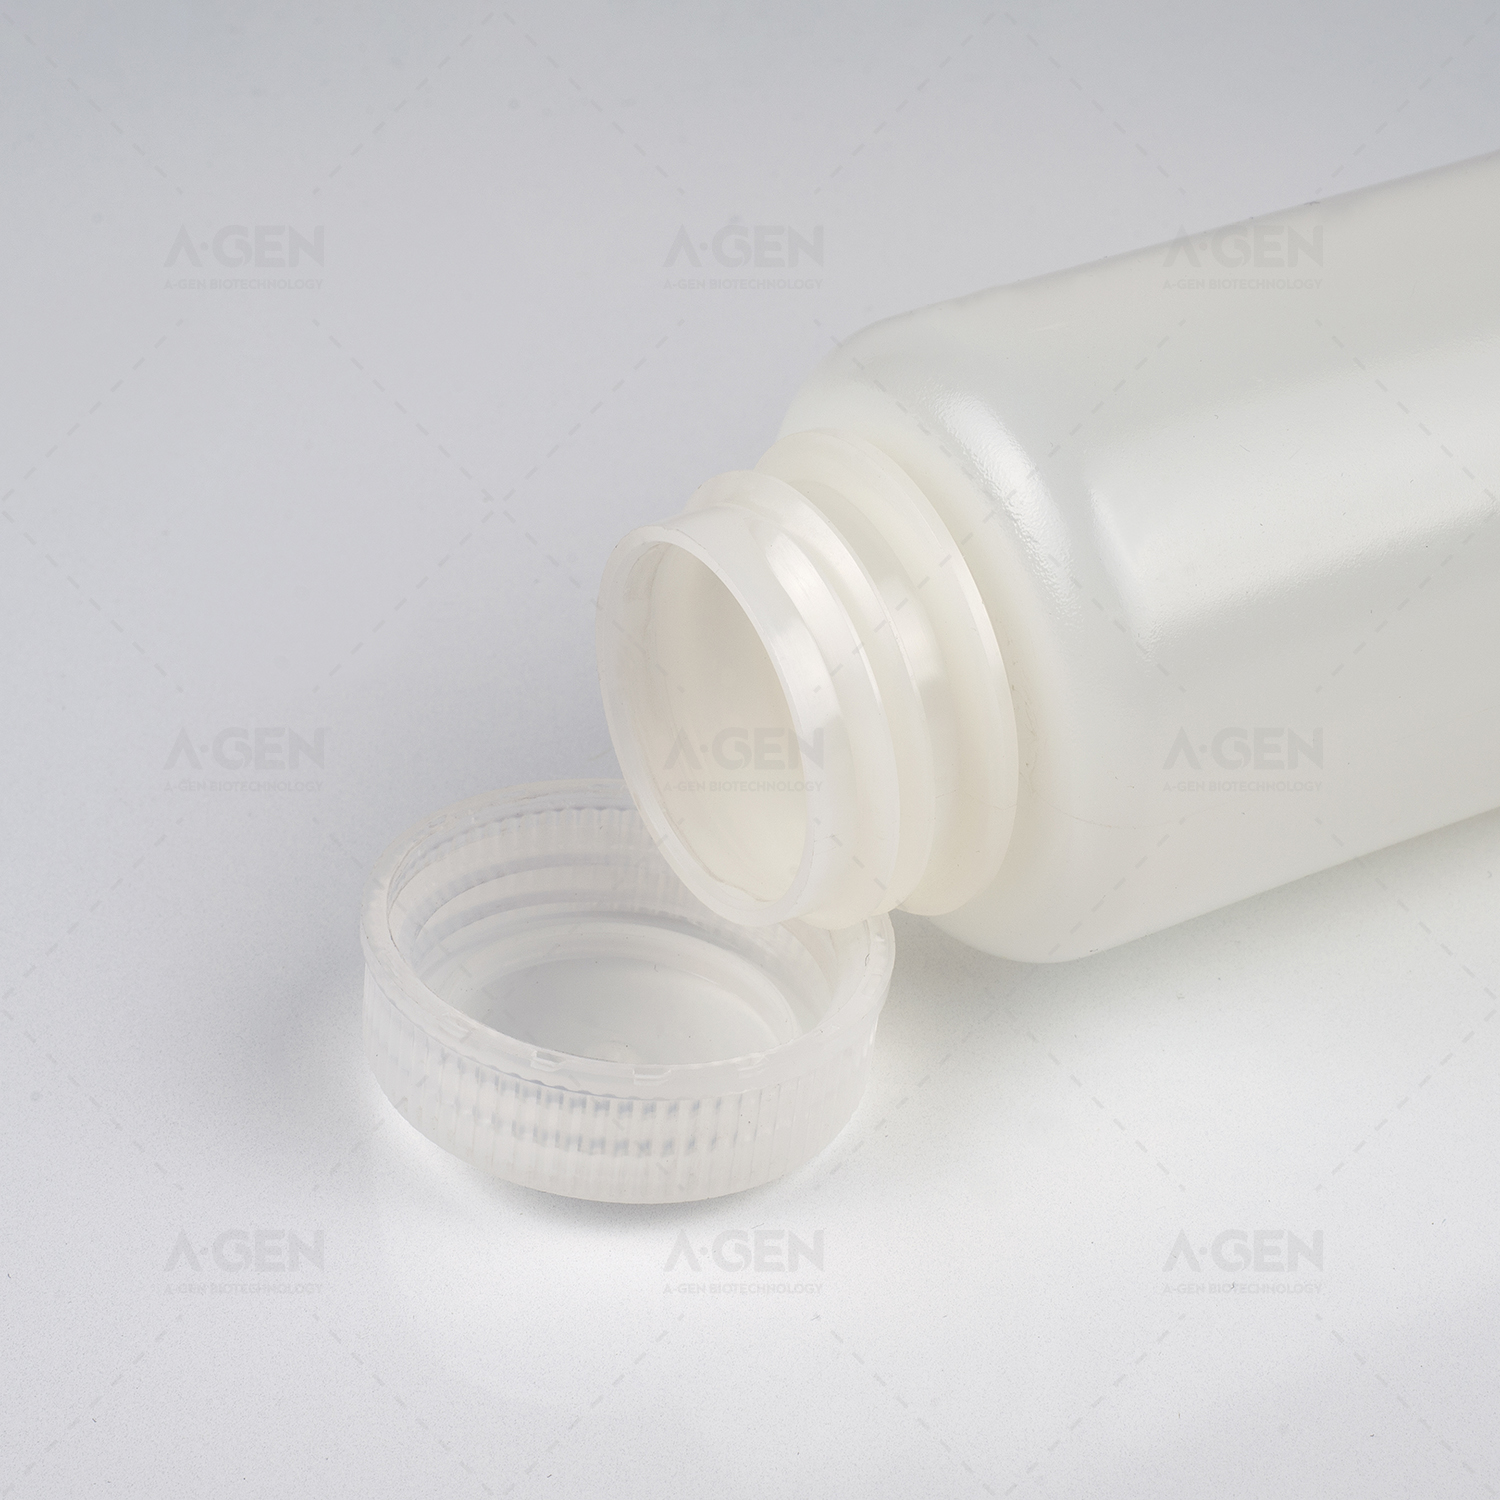 30 mL Transparent Reagent Bottle